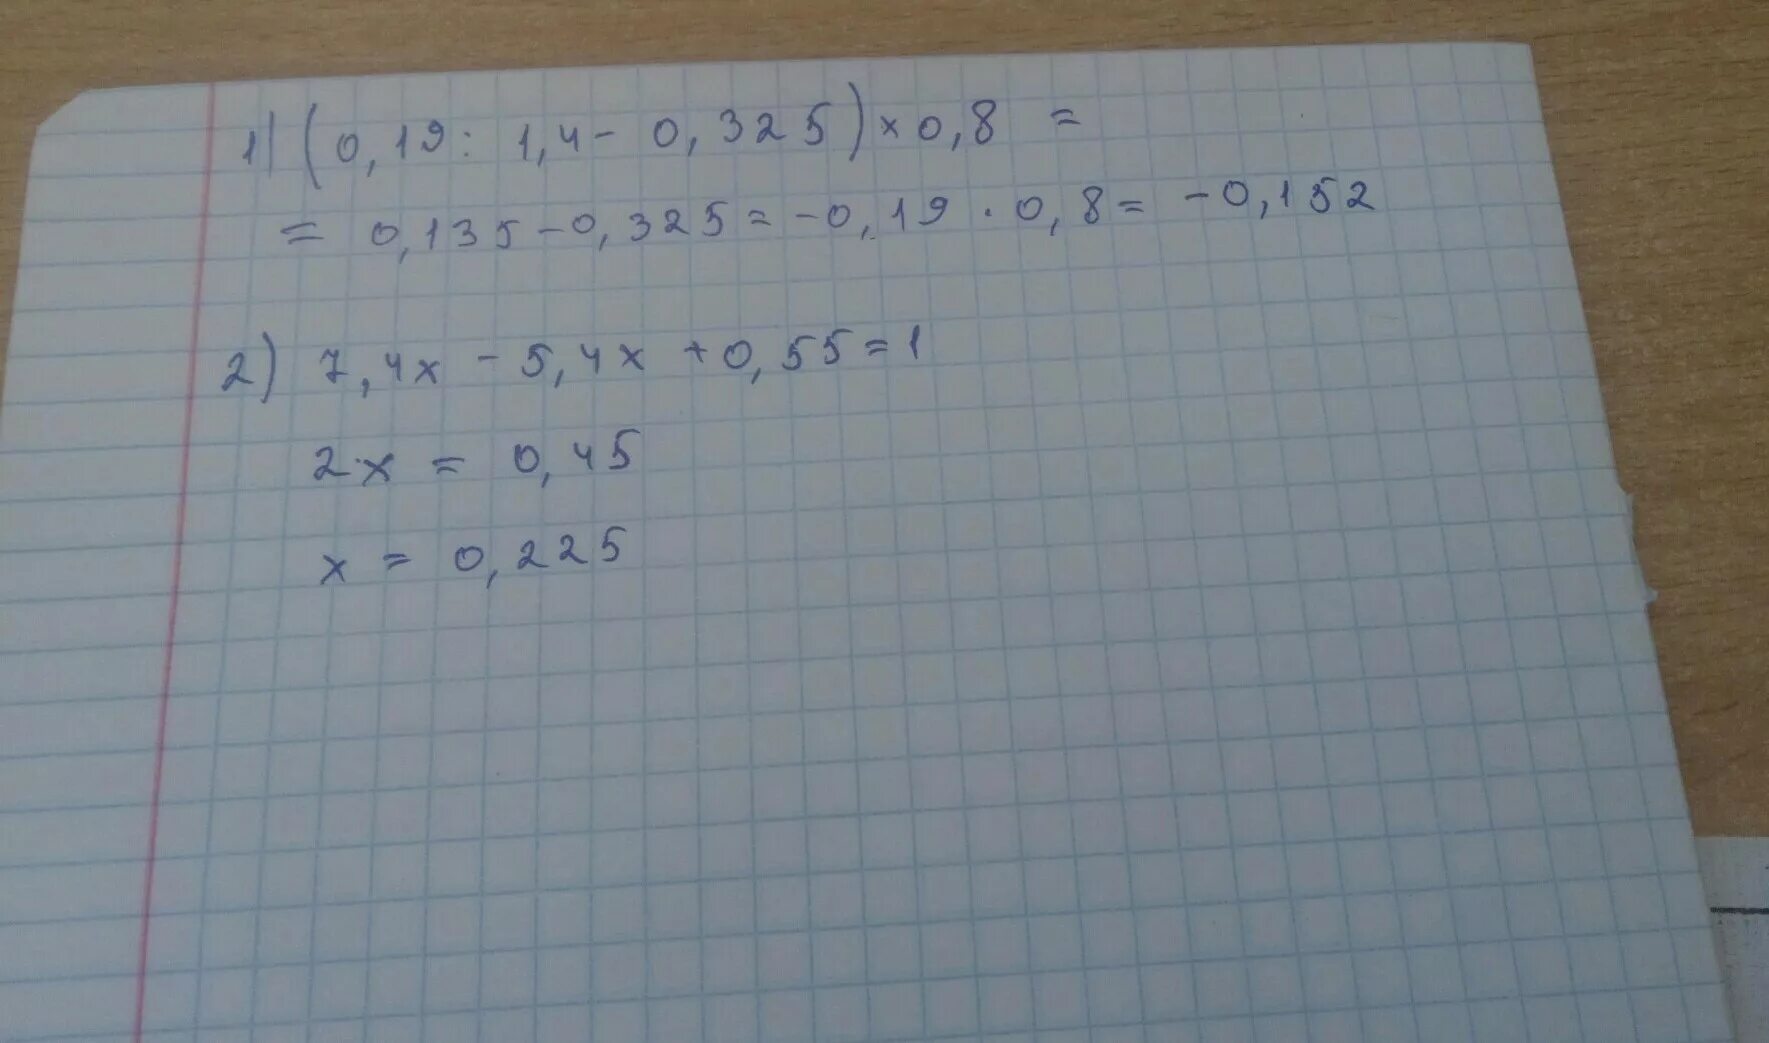 7 x 1 49 0. 7,2х-5,4х+0,55=1. 7 2х 5 4х +0.55 1 решение. 7 2x 5 4x +0.55 равно 1 решение. 1,1х+0,7х+0,55=1.